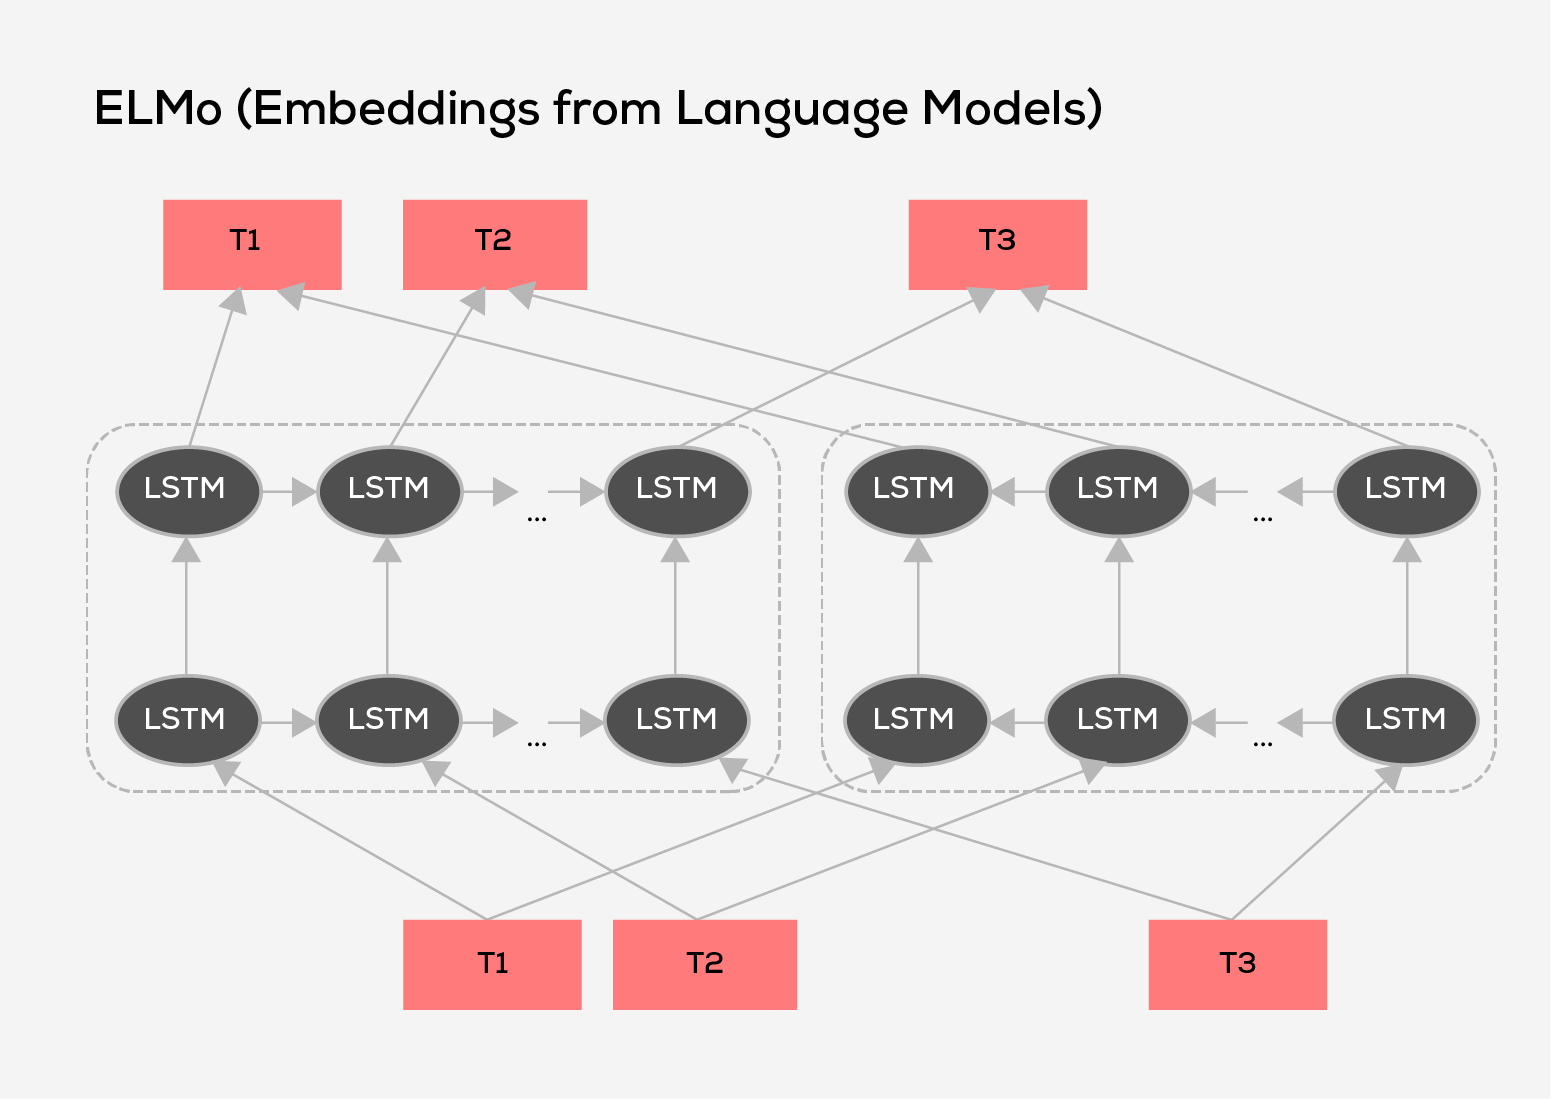 Embeddings from Language Models (ELMo)